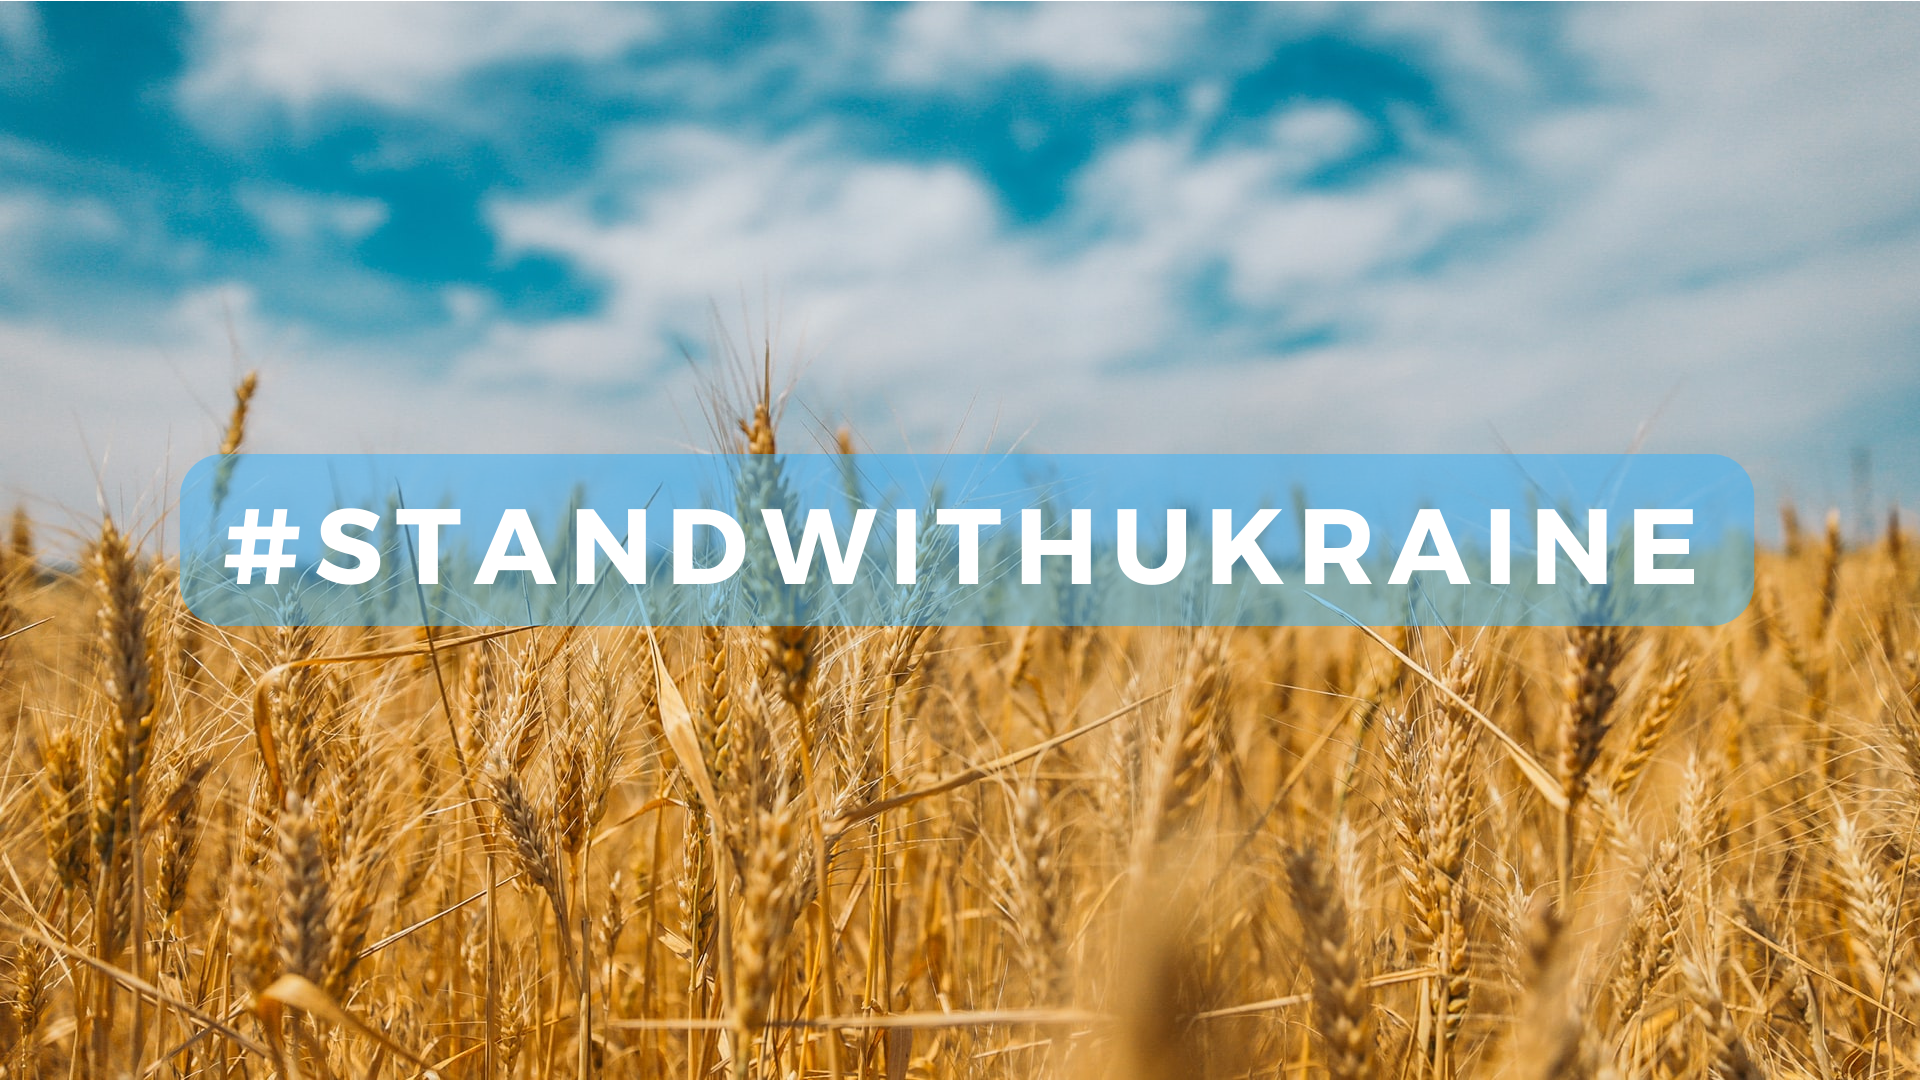 #StandWithUkraine